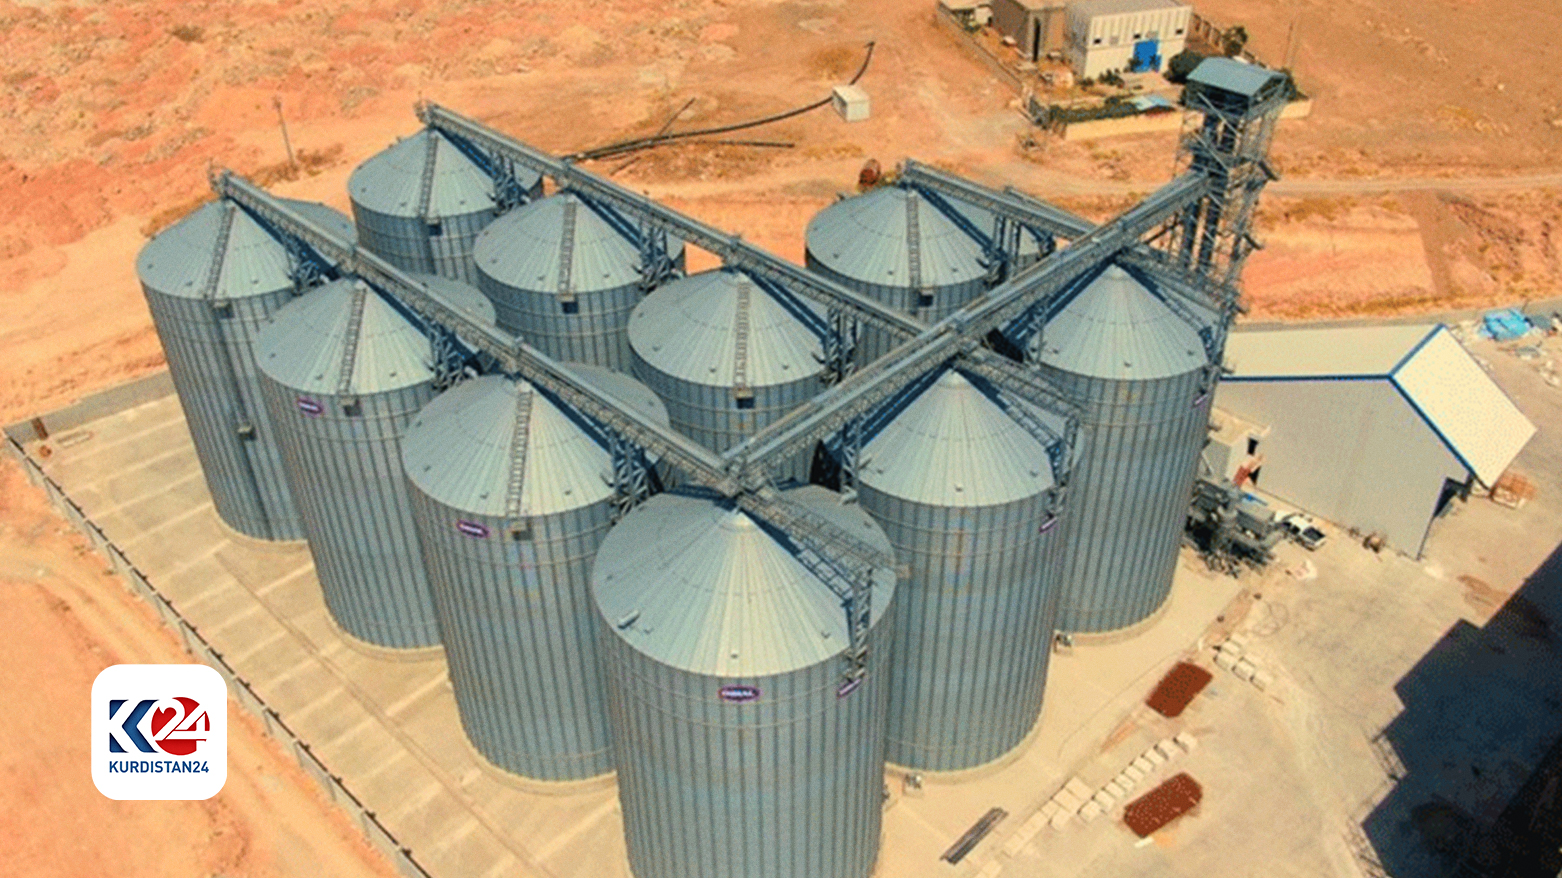 A photo of a silo project in Duhok province. (Photo: Kurdistan 24)